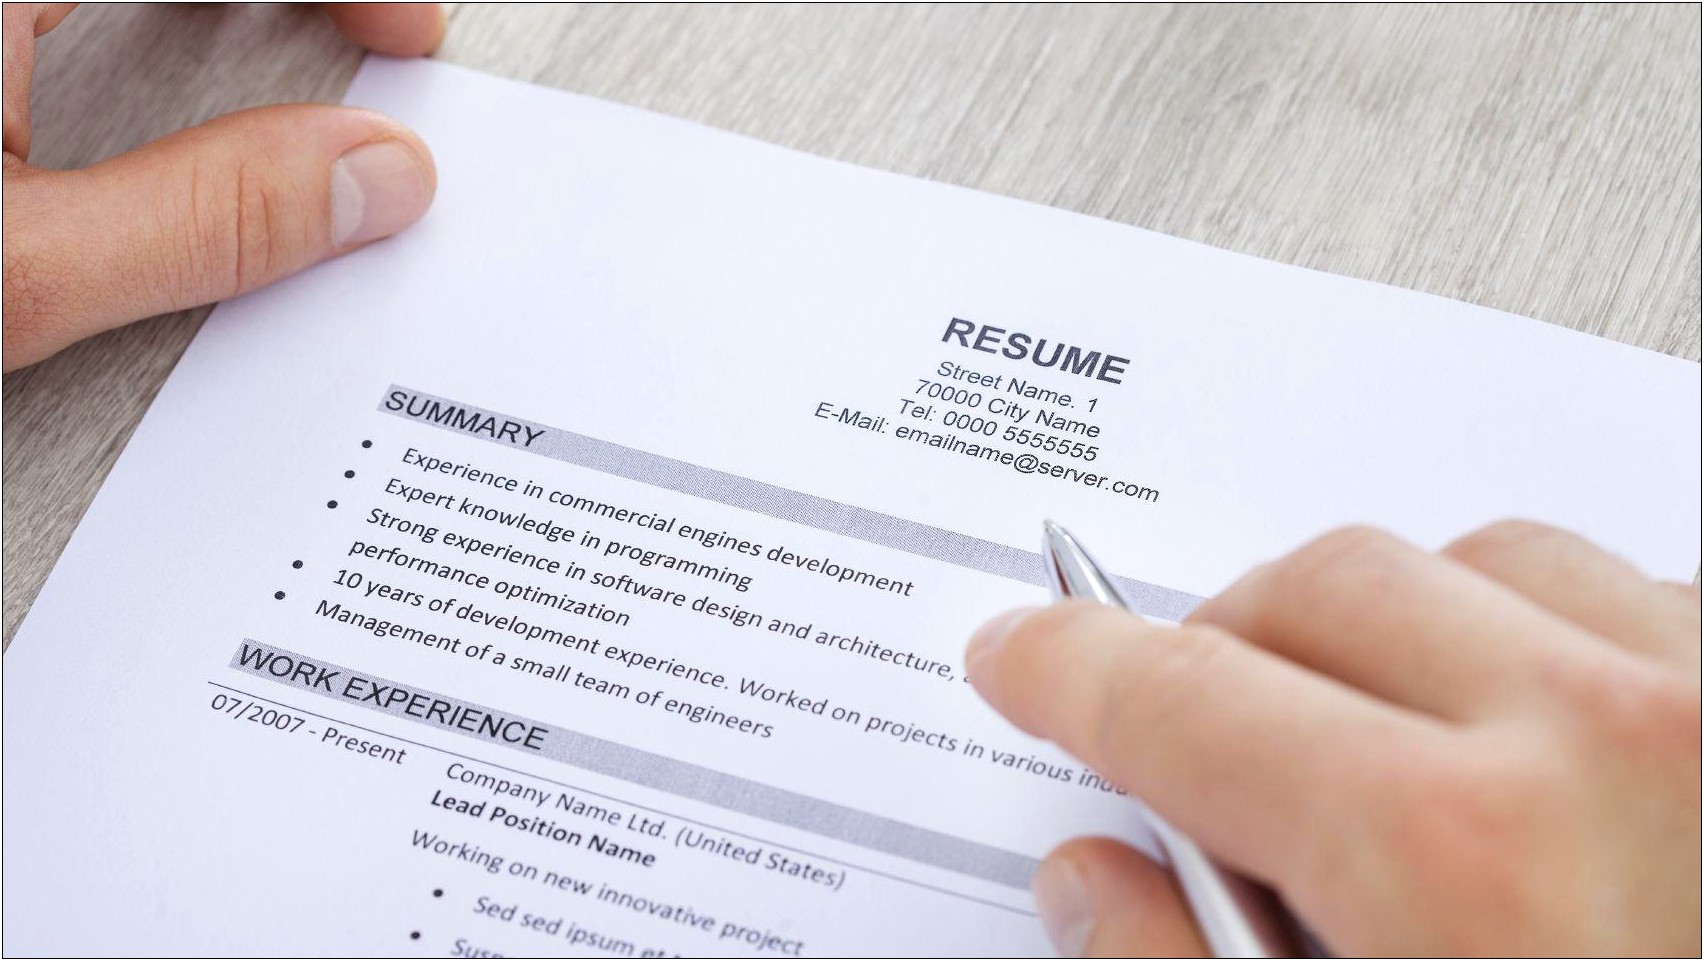 Executive Summary Or Career Objective On A Resume